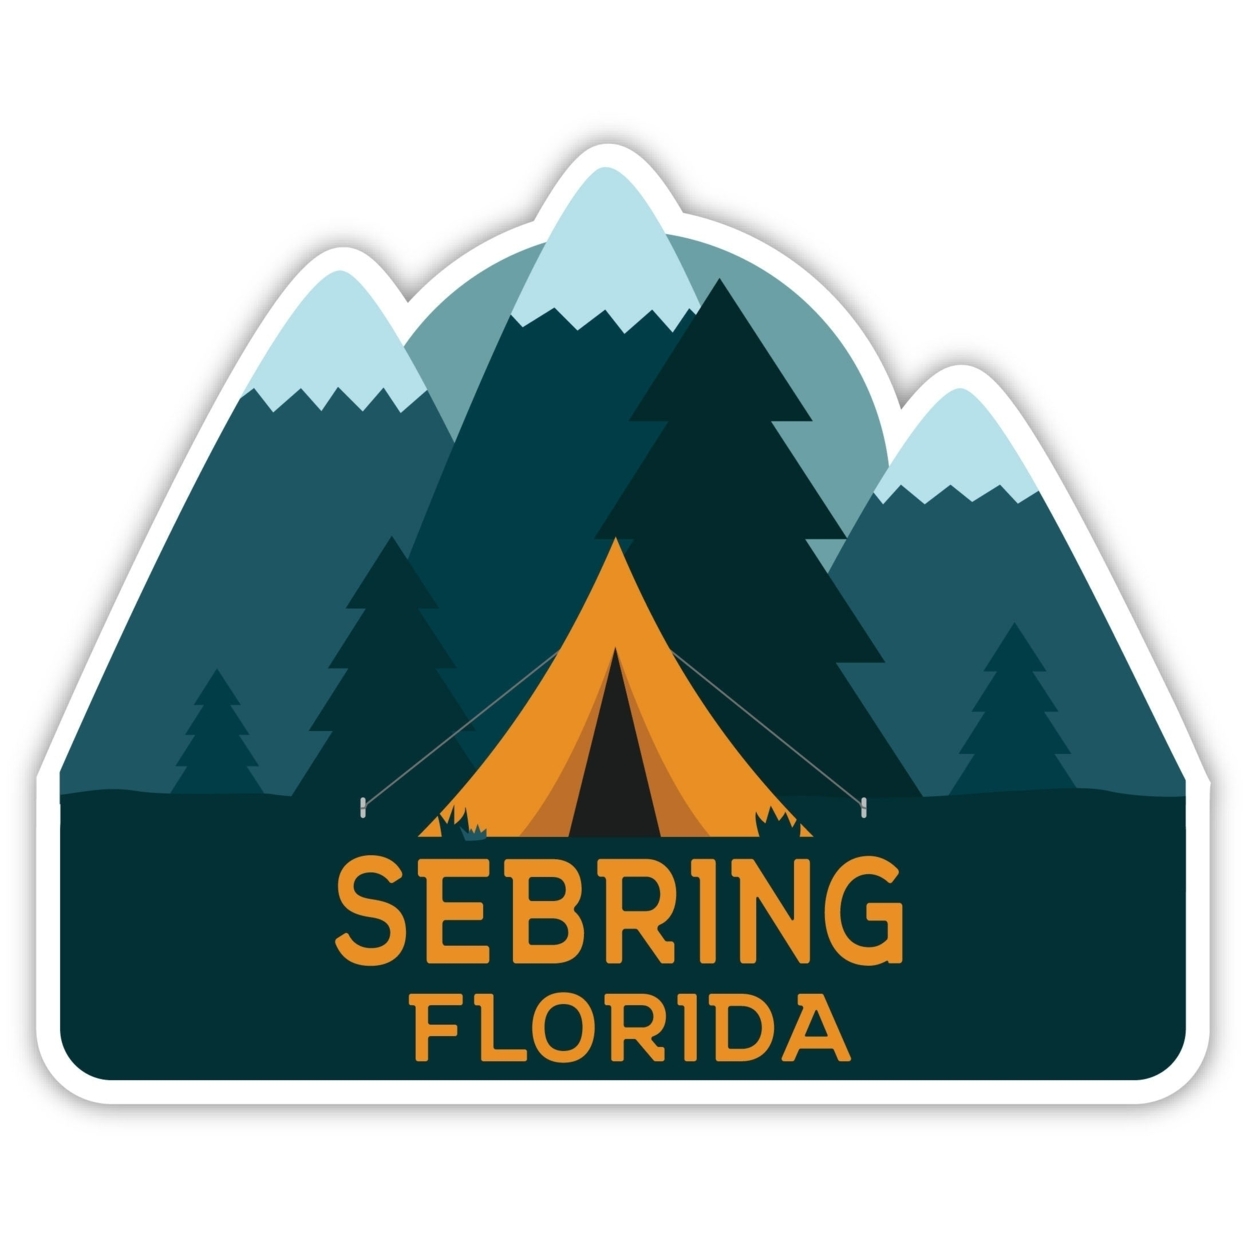 Sebring Florida Souvenir Decorative Stickers (Choose Theme And Size) - Single Unit, 4-Inch, Tent